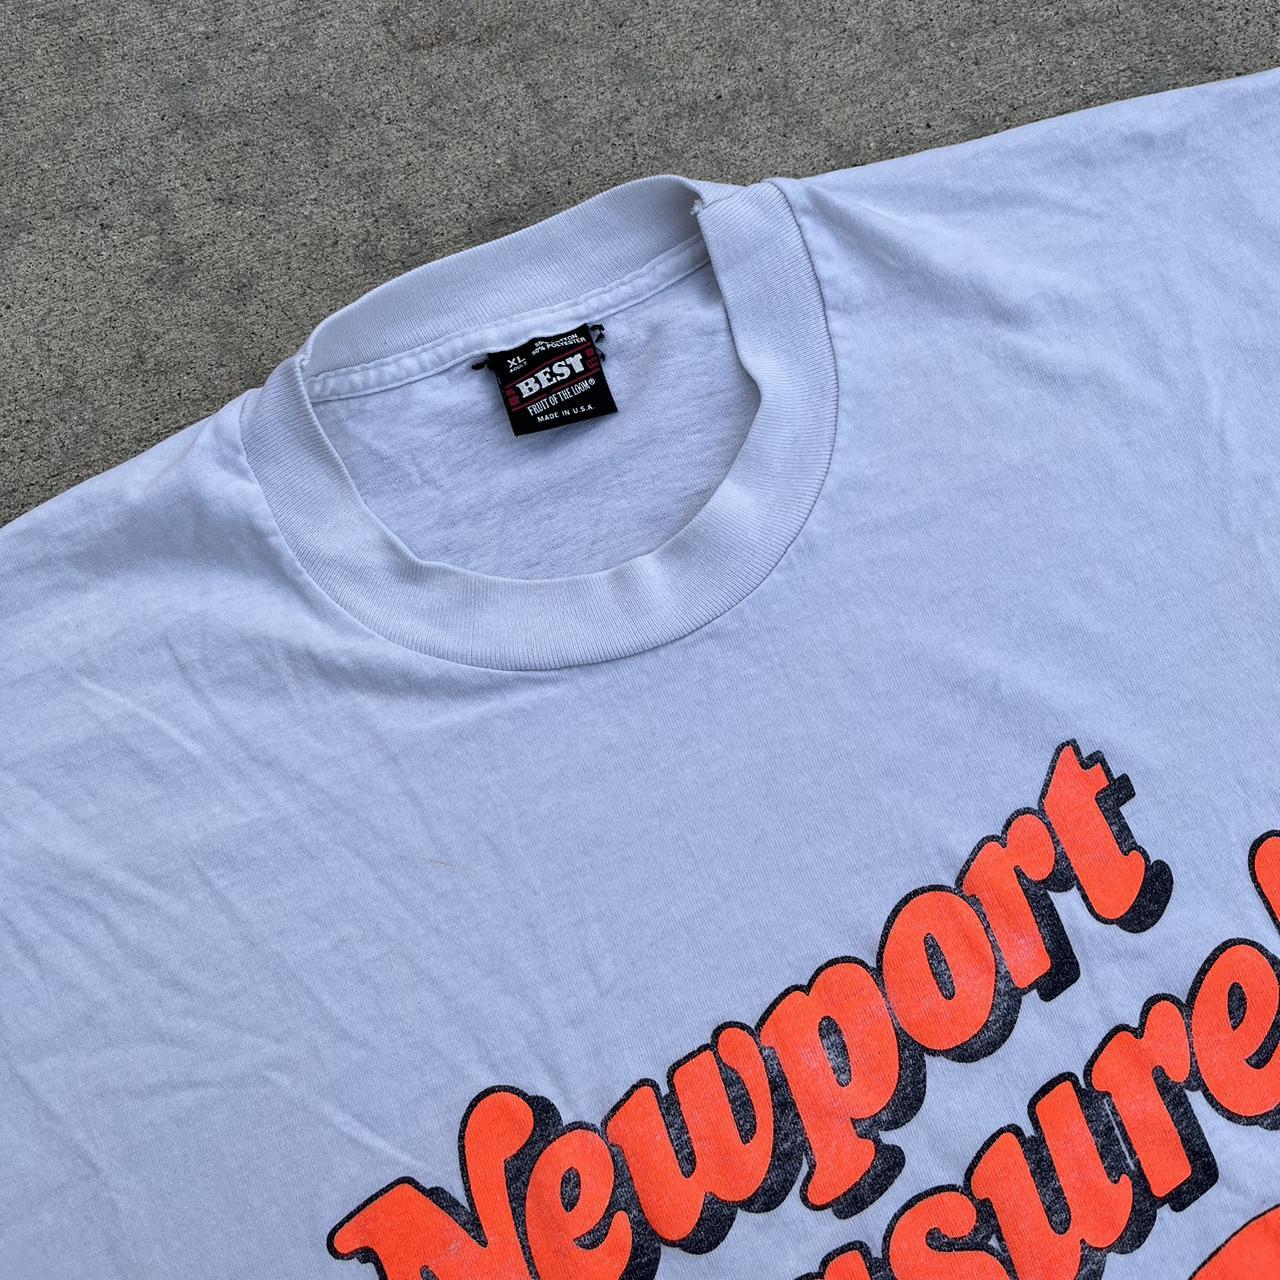 Newport Men's White and Orange T-shirt | Depop